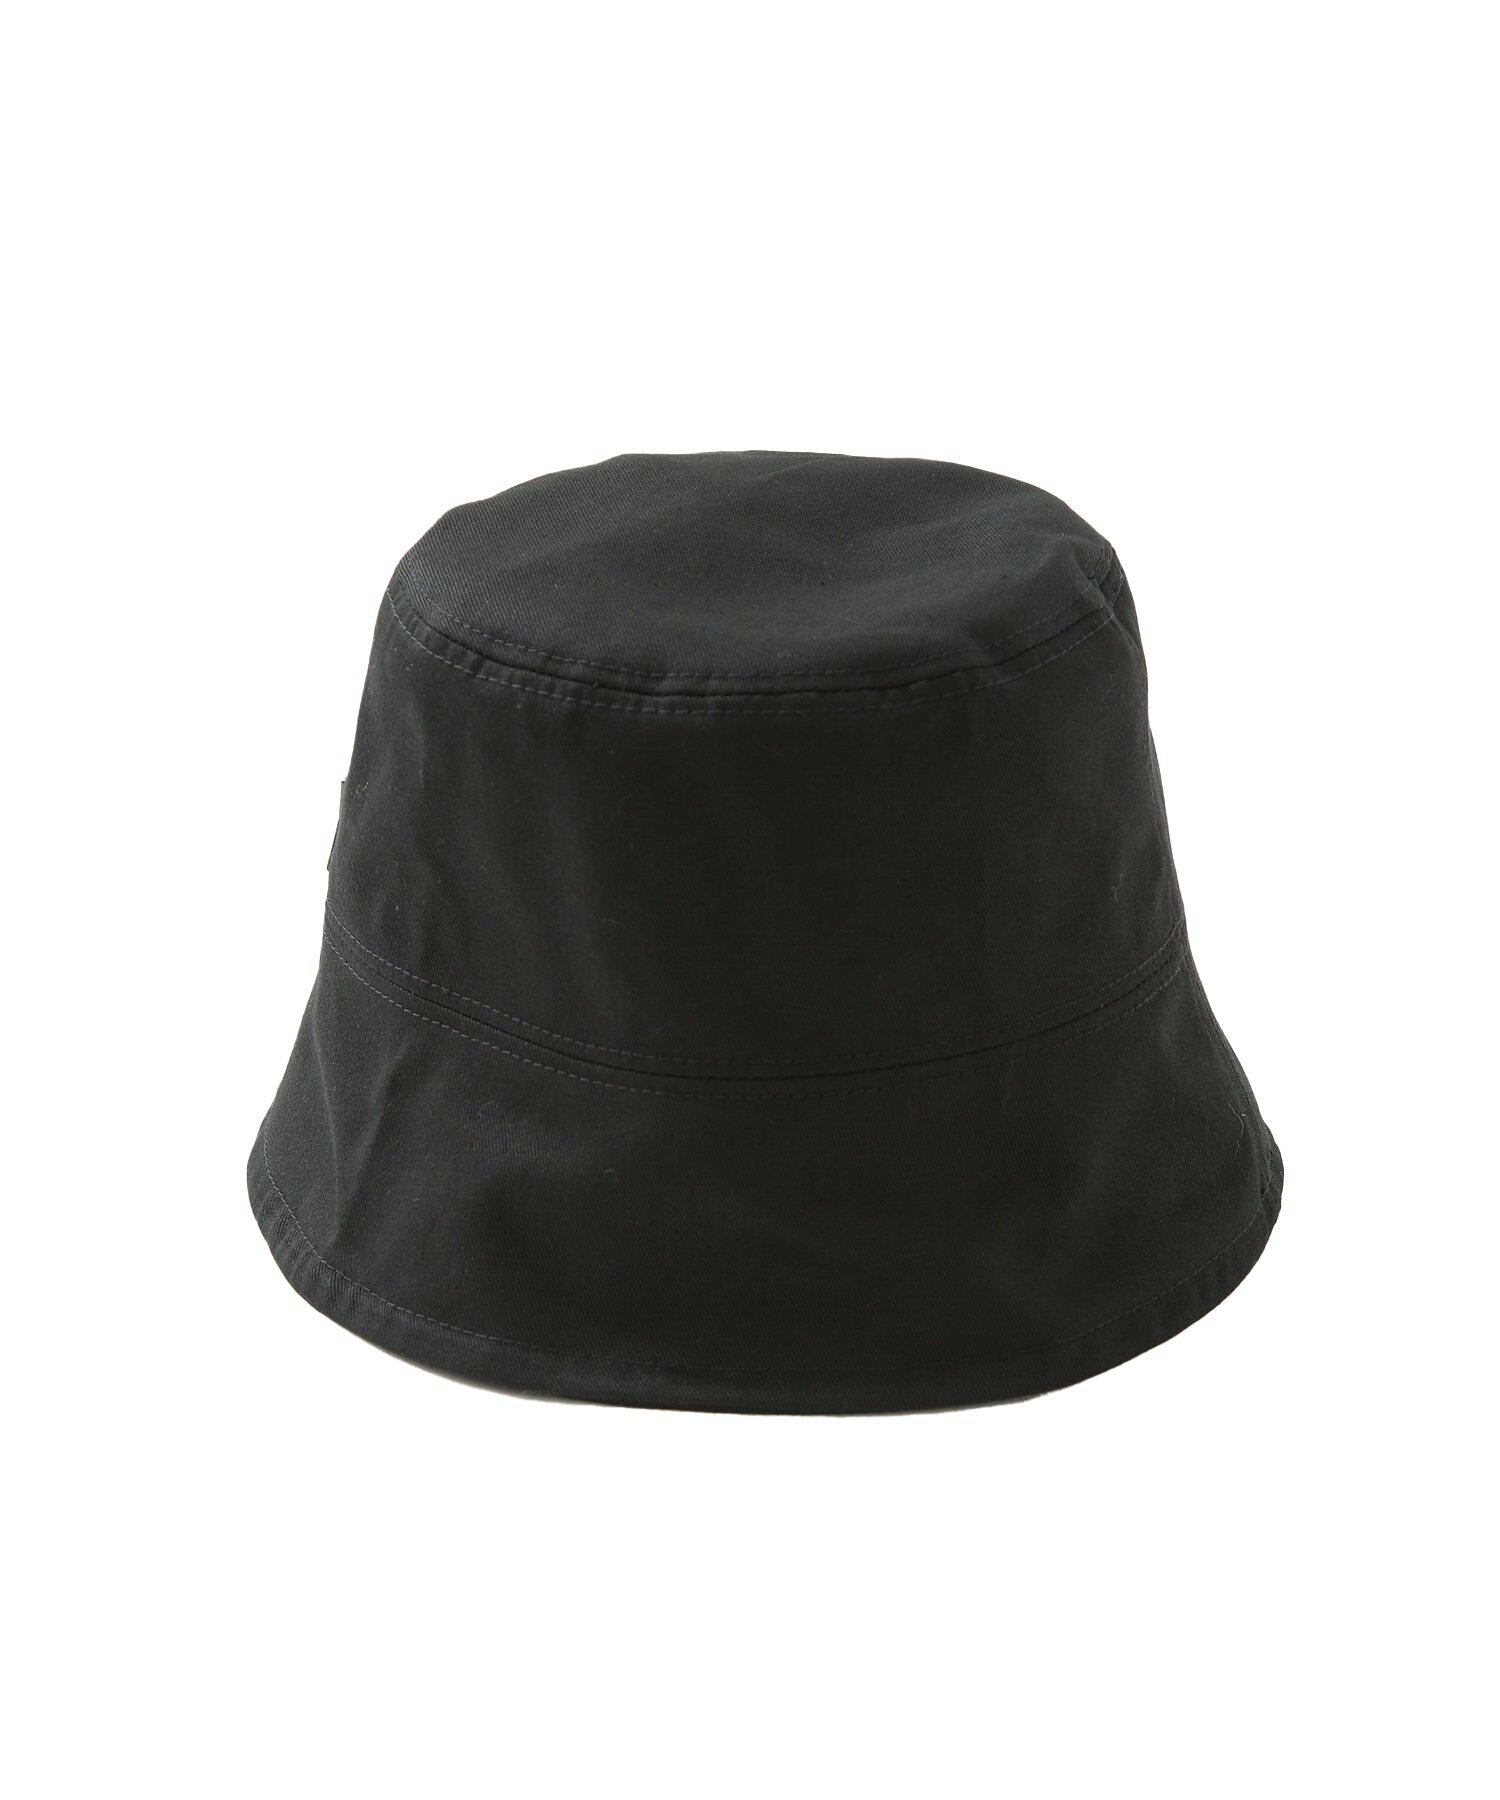 【 VARZAR / バザール 】Stud drop over fit bucket hat